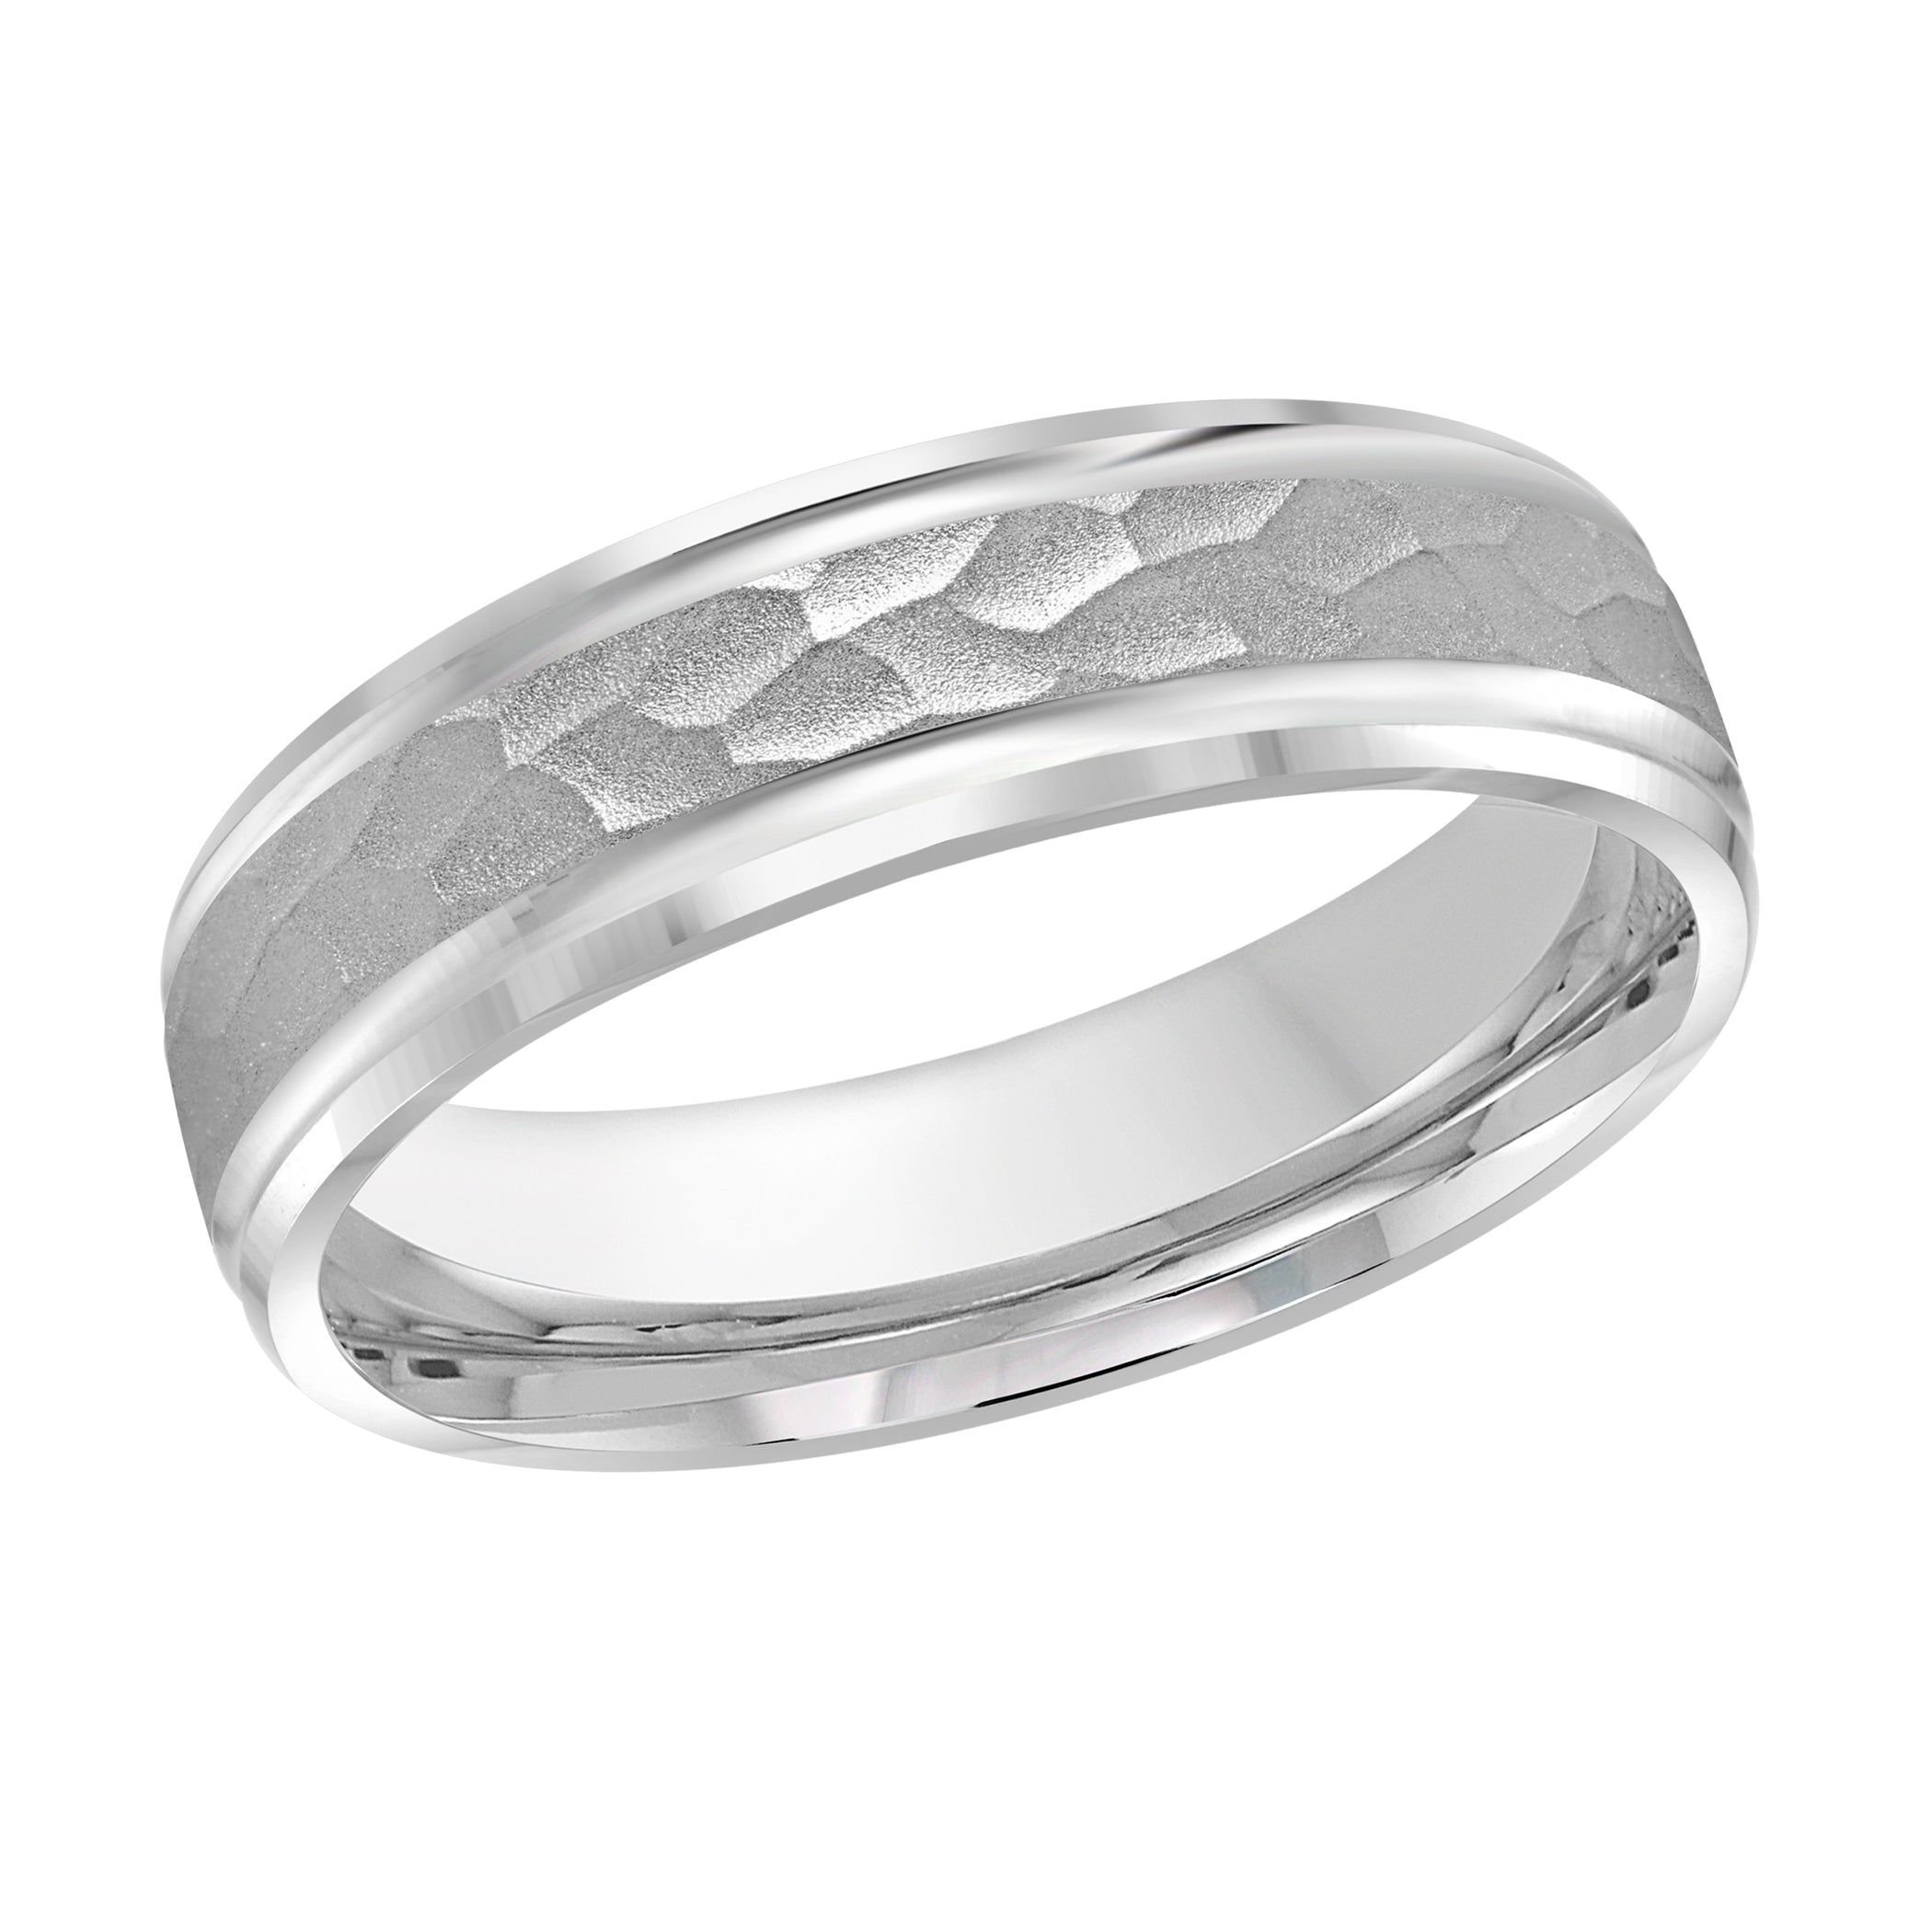 Men's 6mm Hammered-finish Beveled Edge Wedding Ring